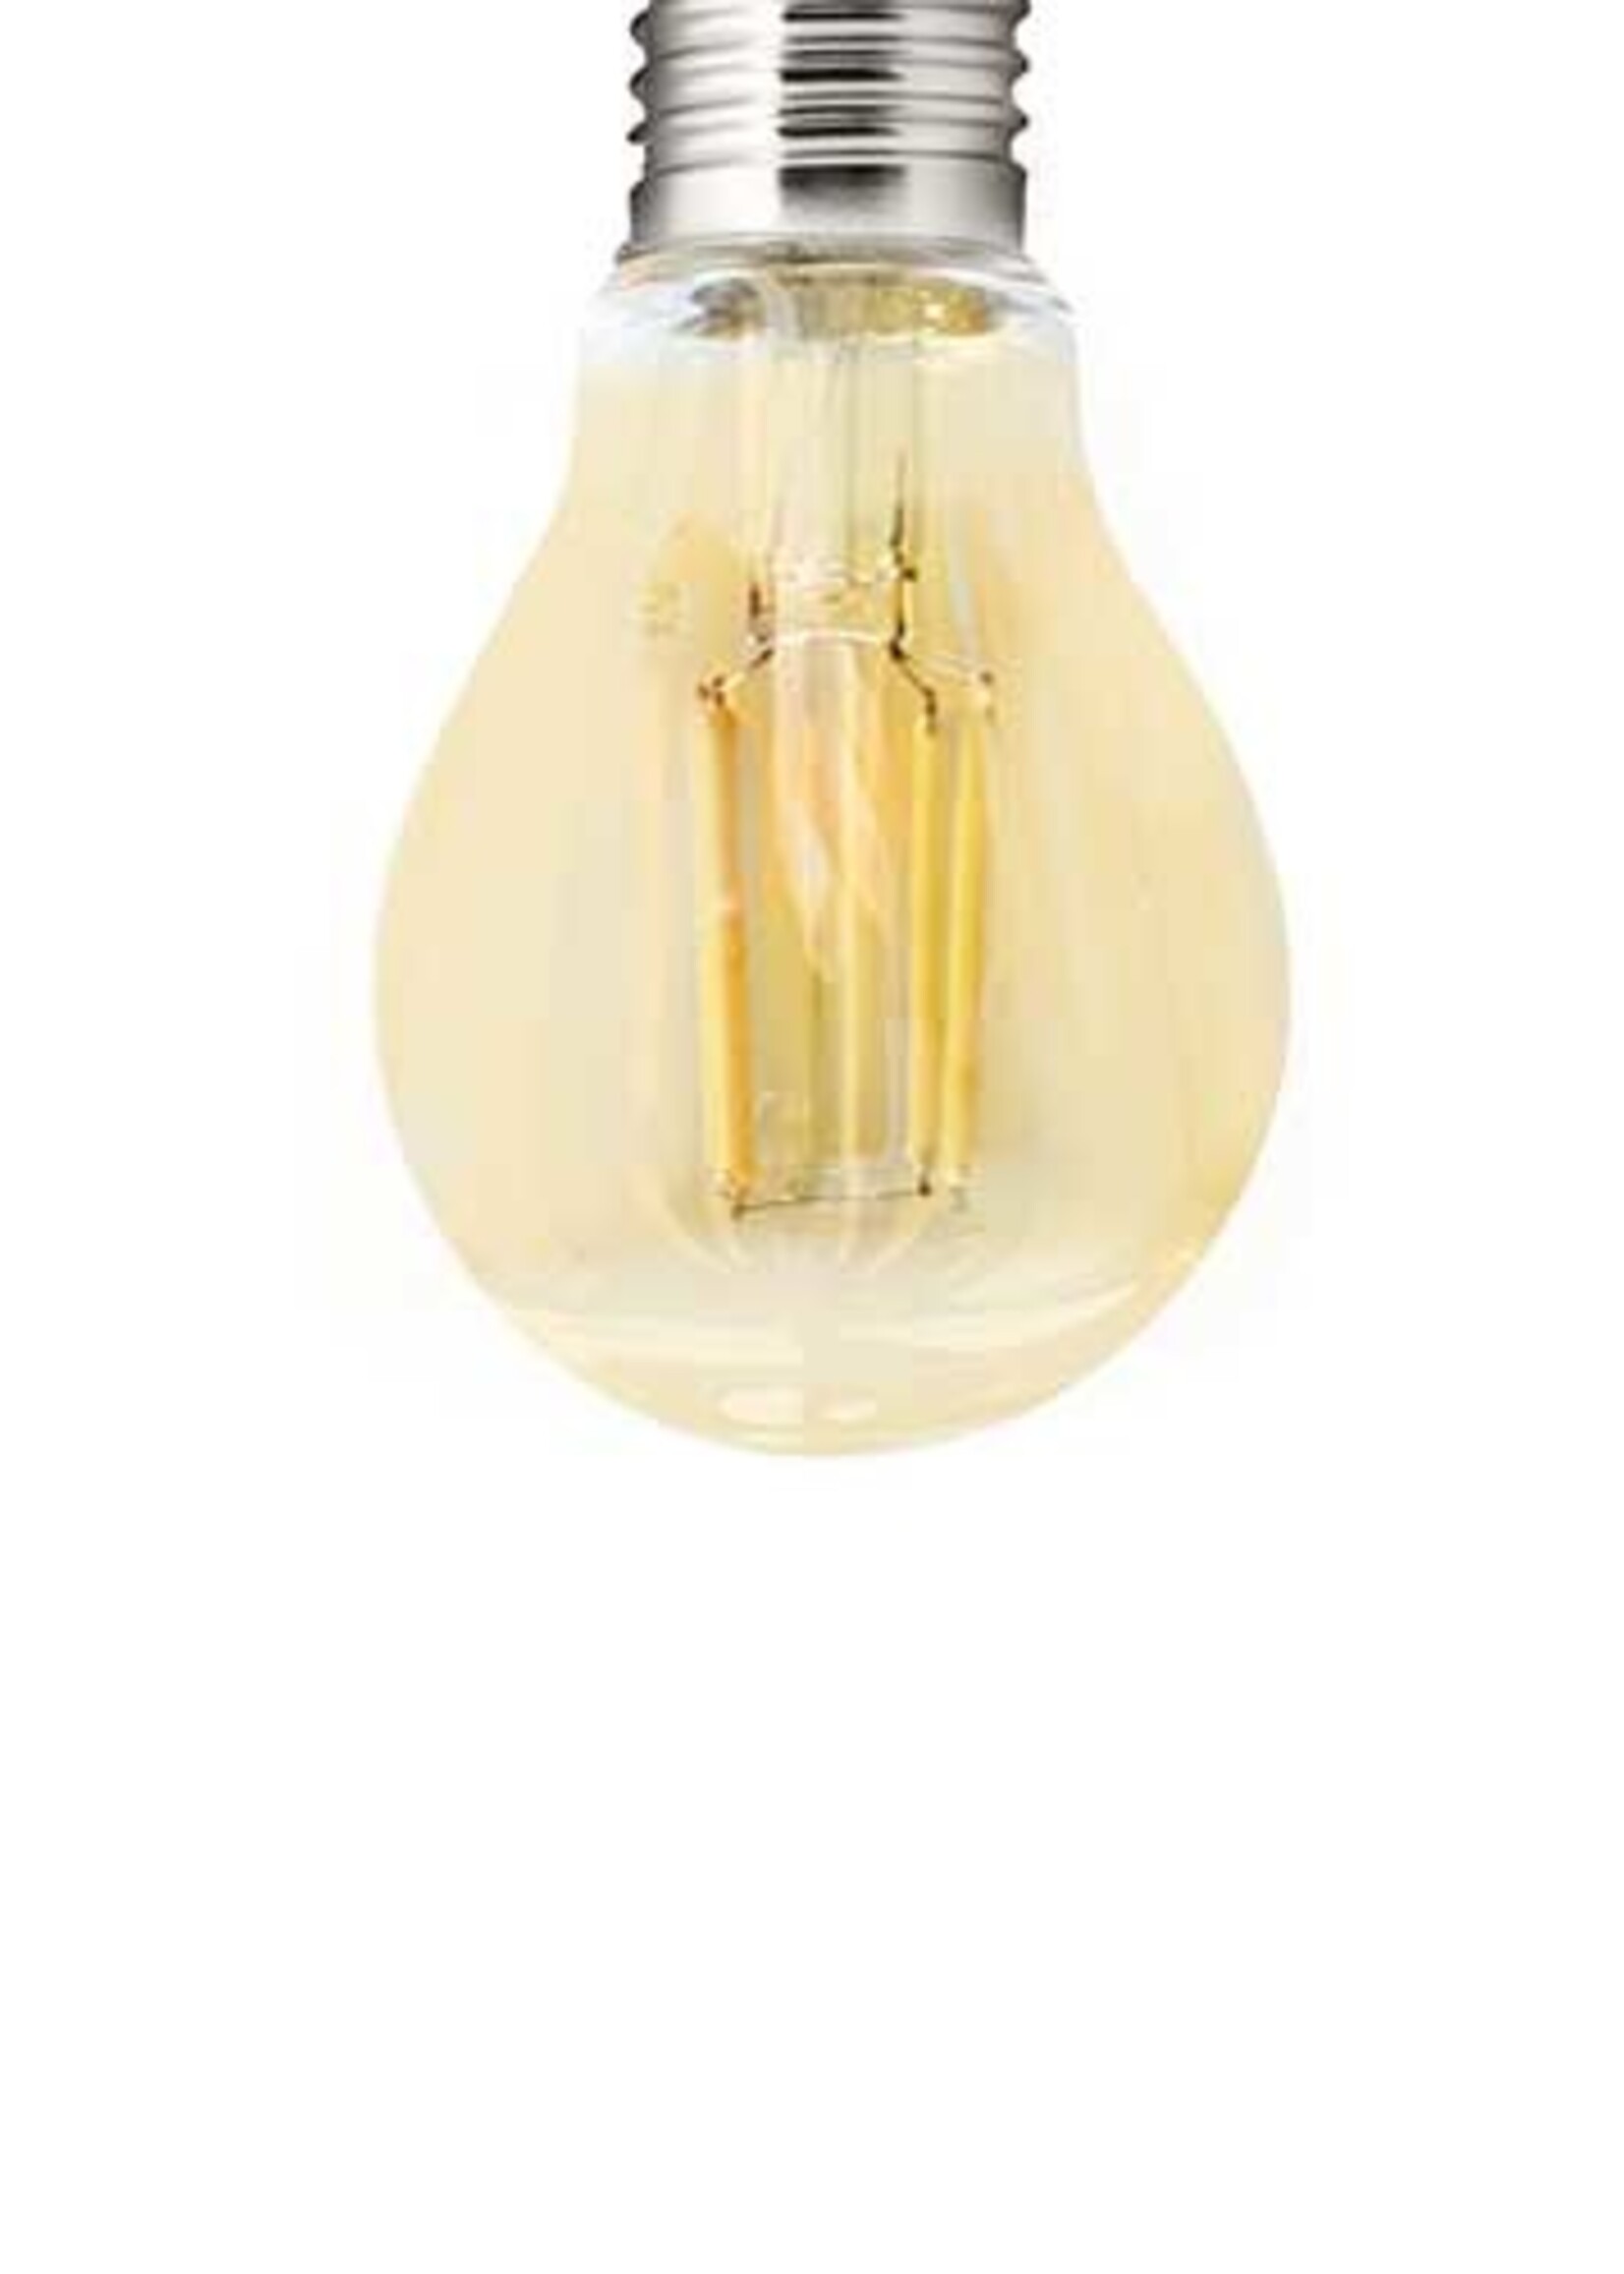 LEDWINKEL-Online E27 LED Lamp filament A60 5W 2200K dimmable